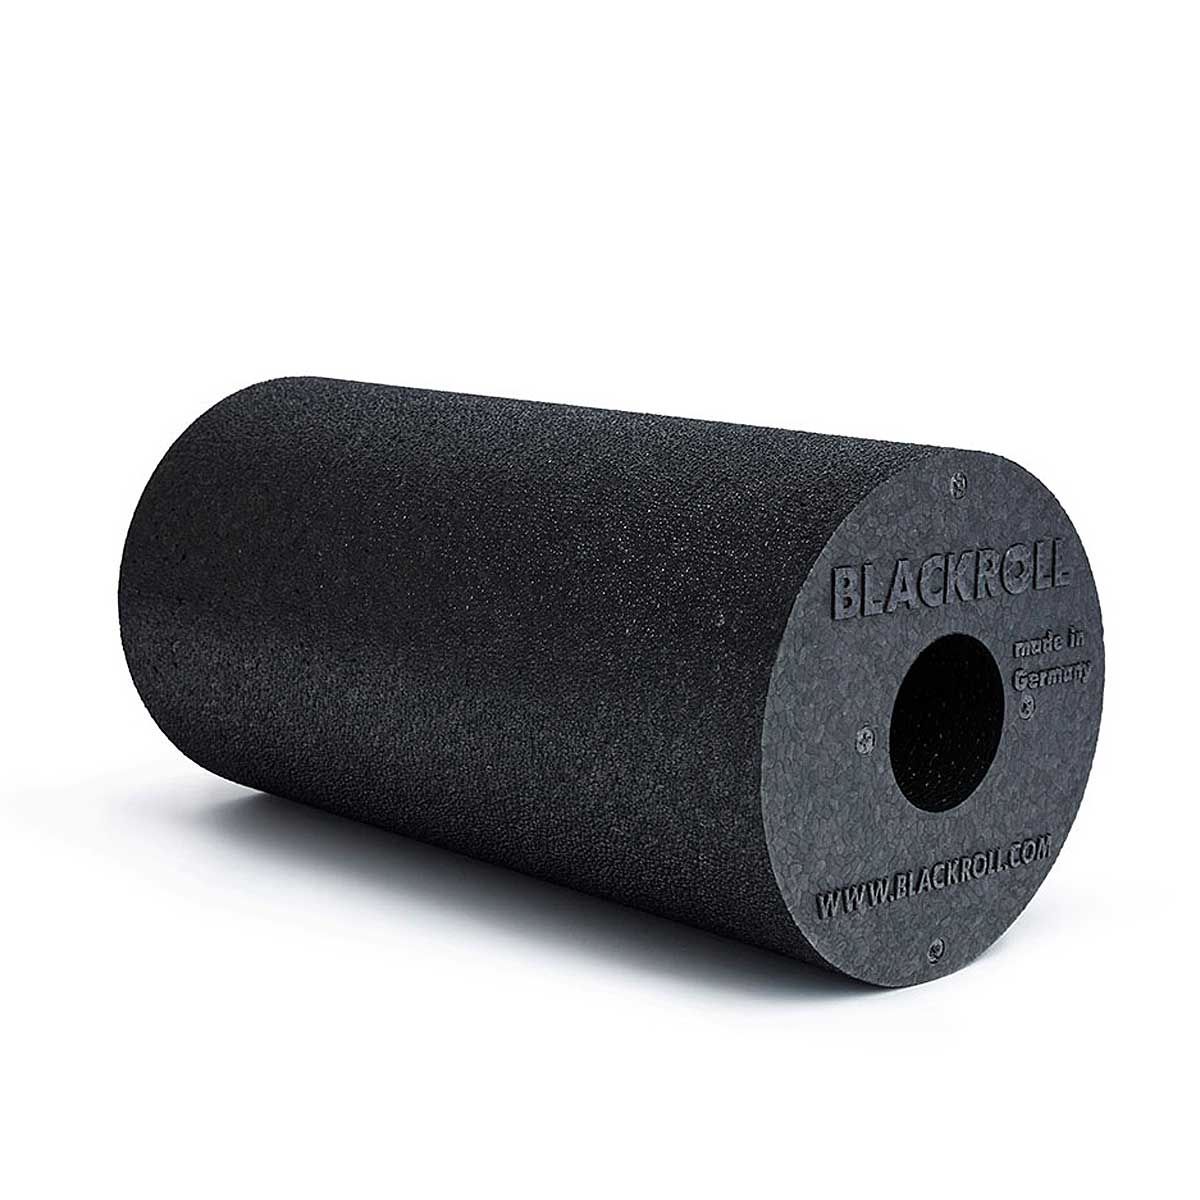 Blackroll Blackroll Standard | Black